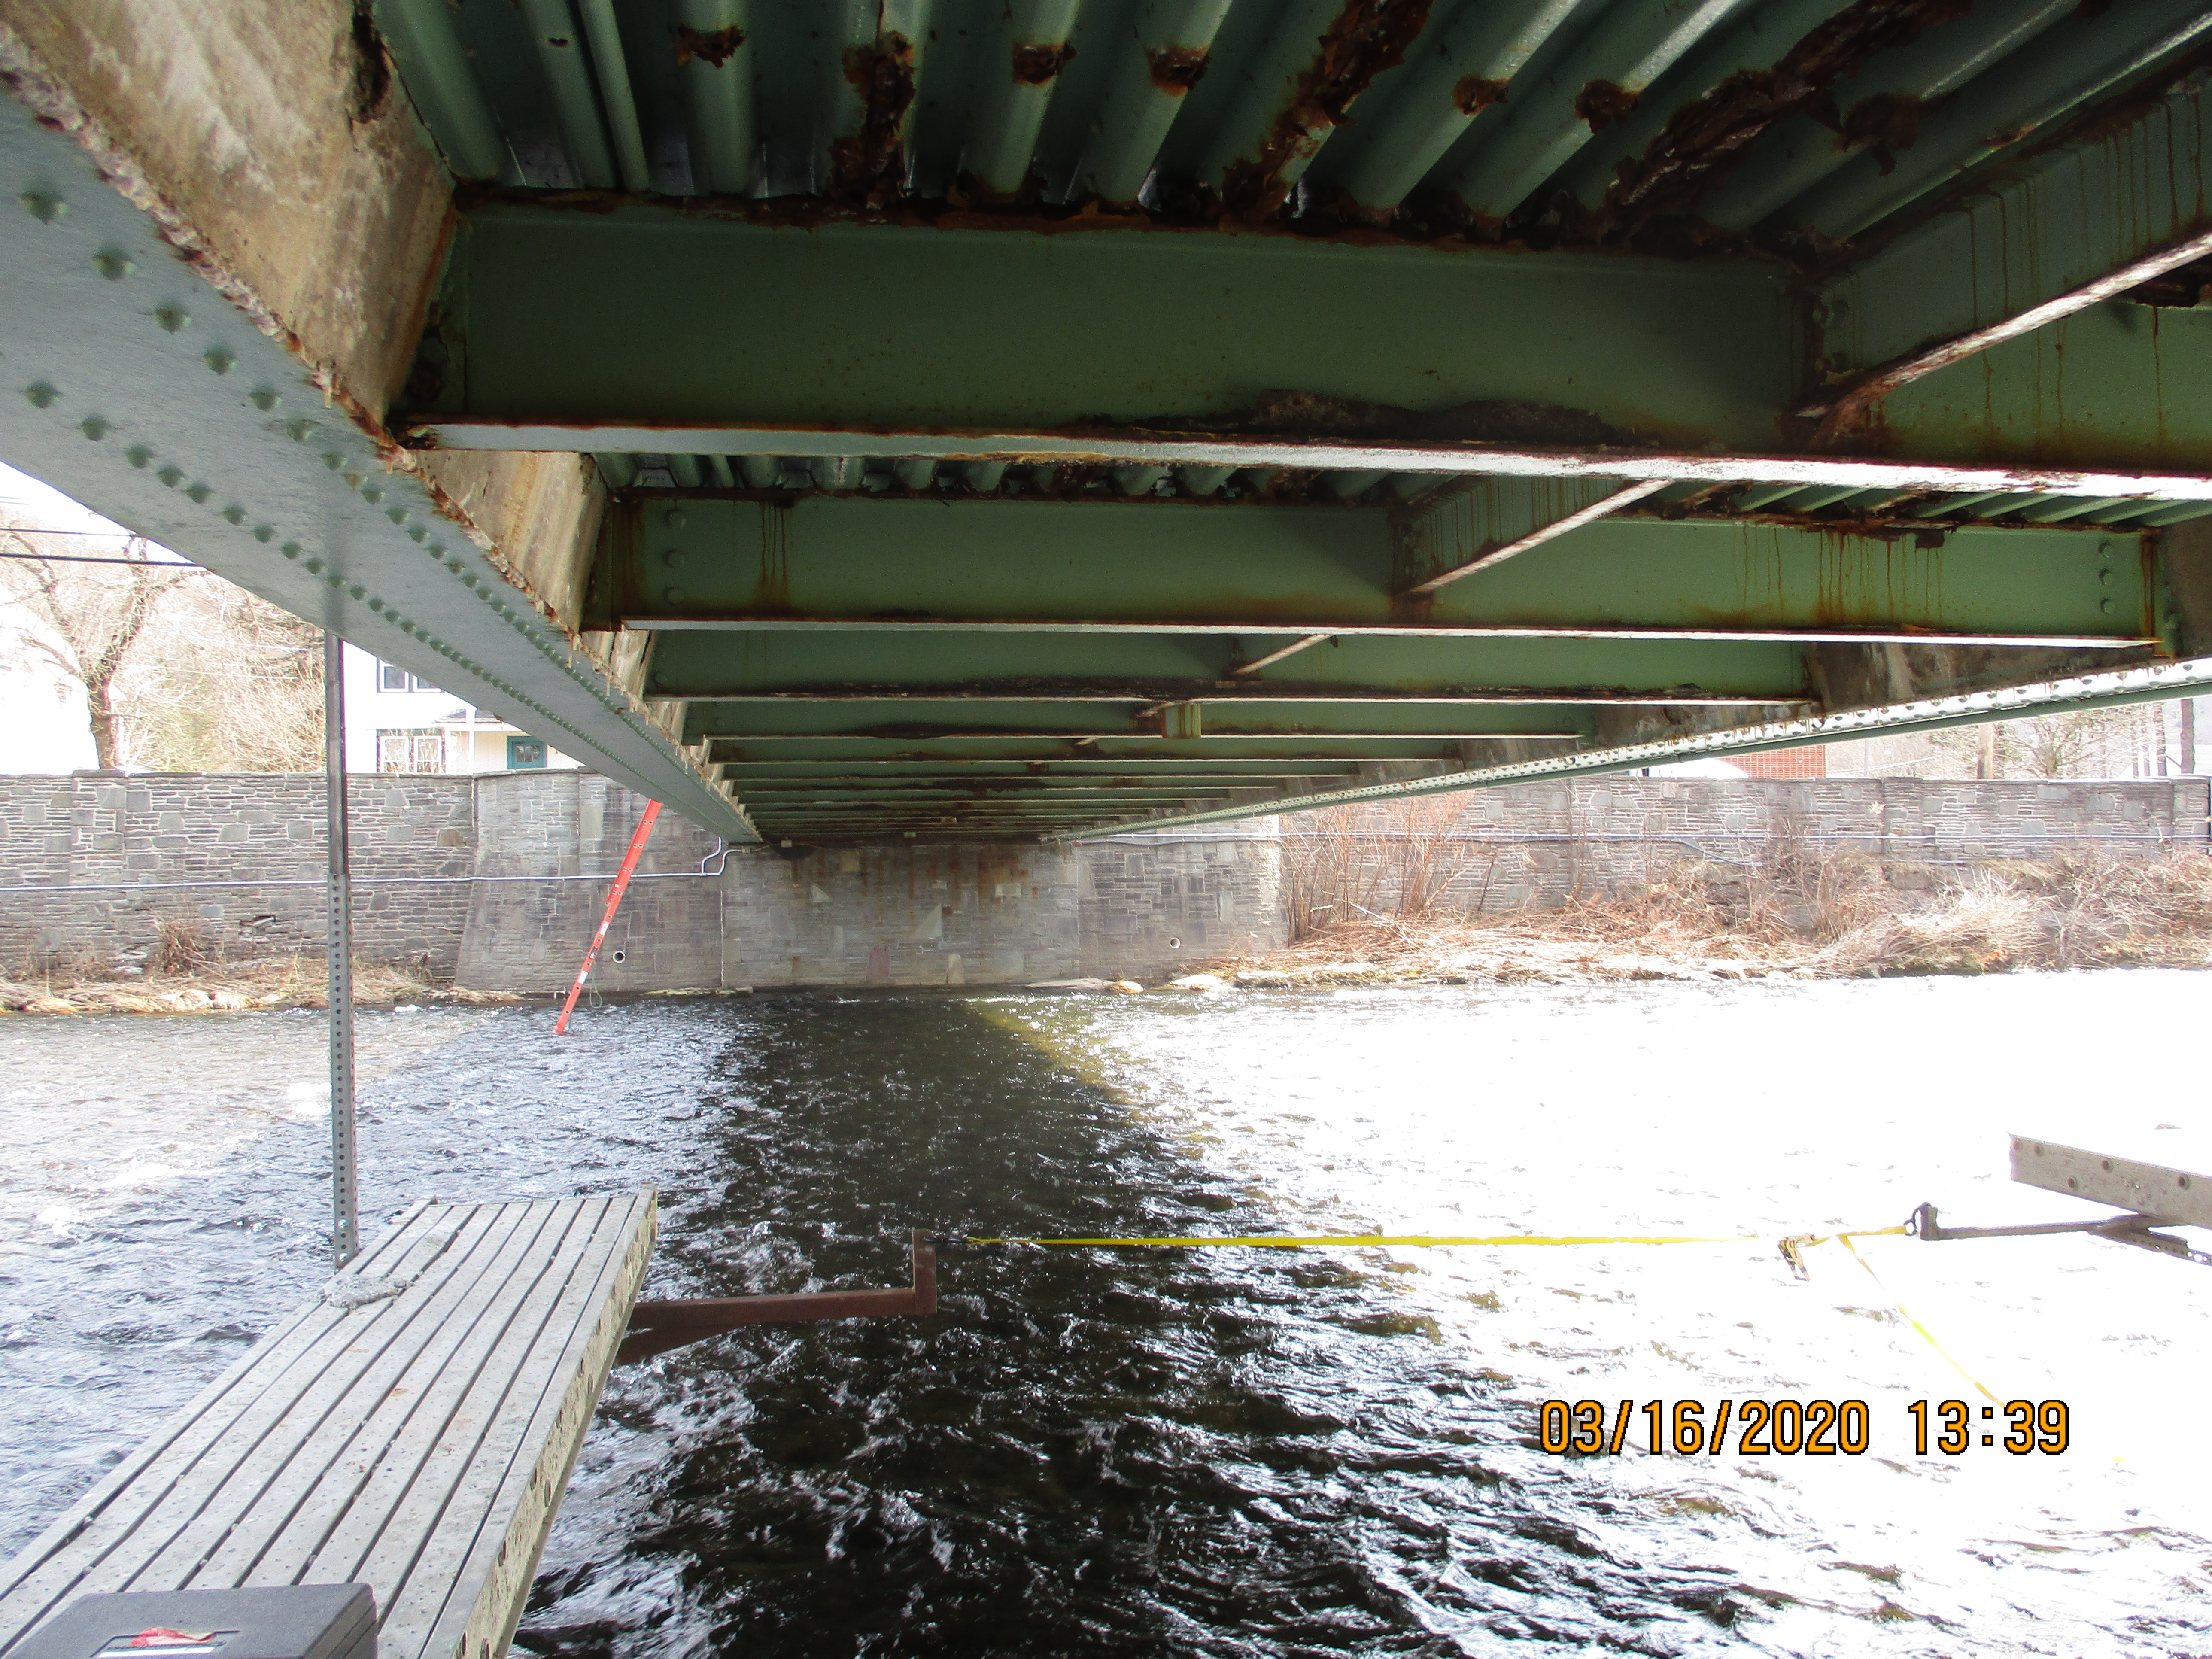 deterioration underneath the bridge structure